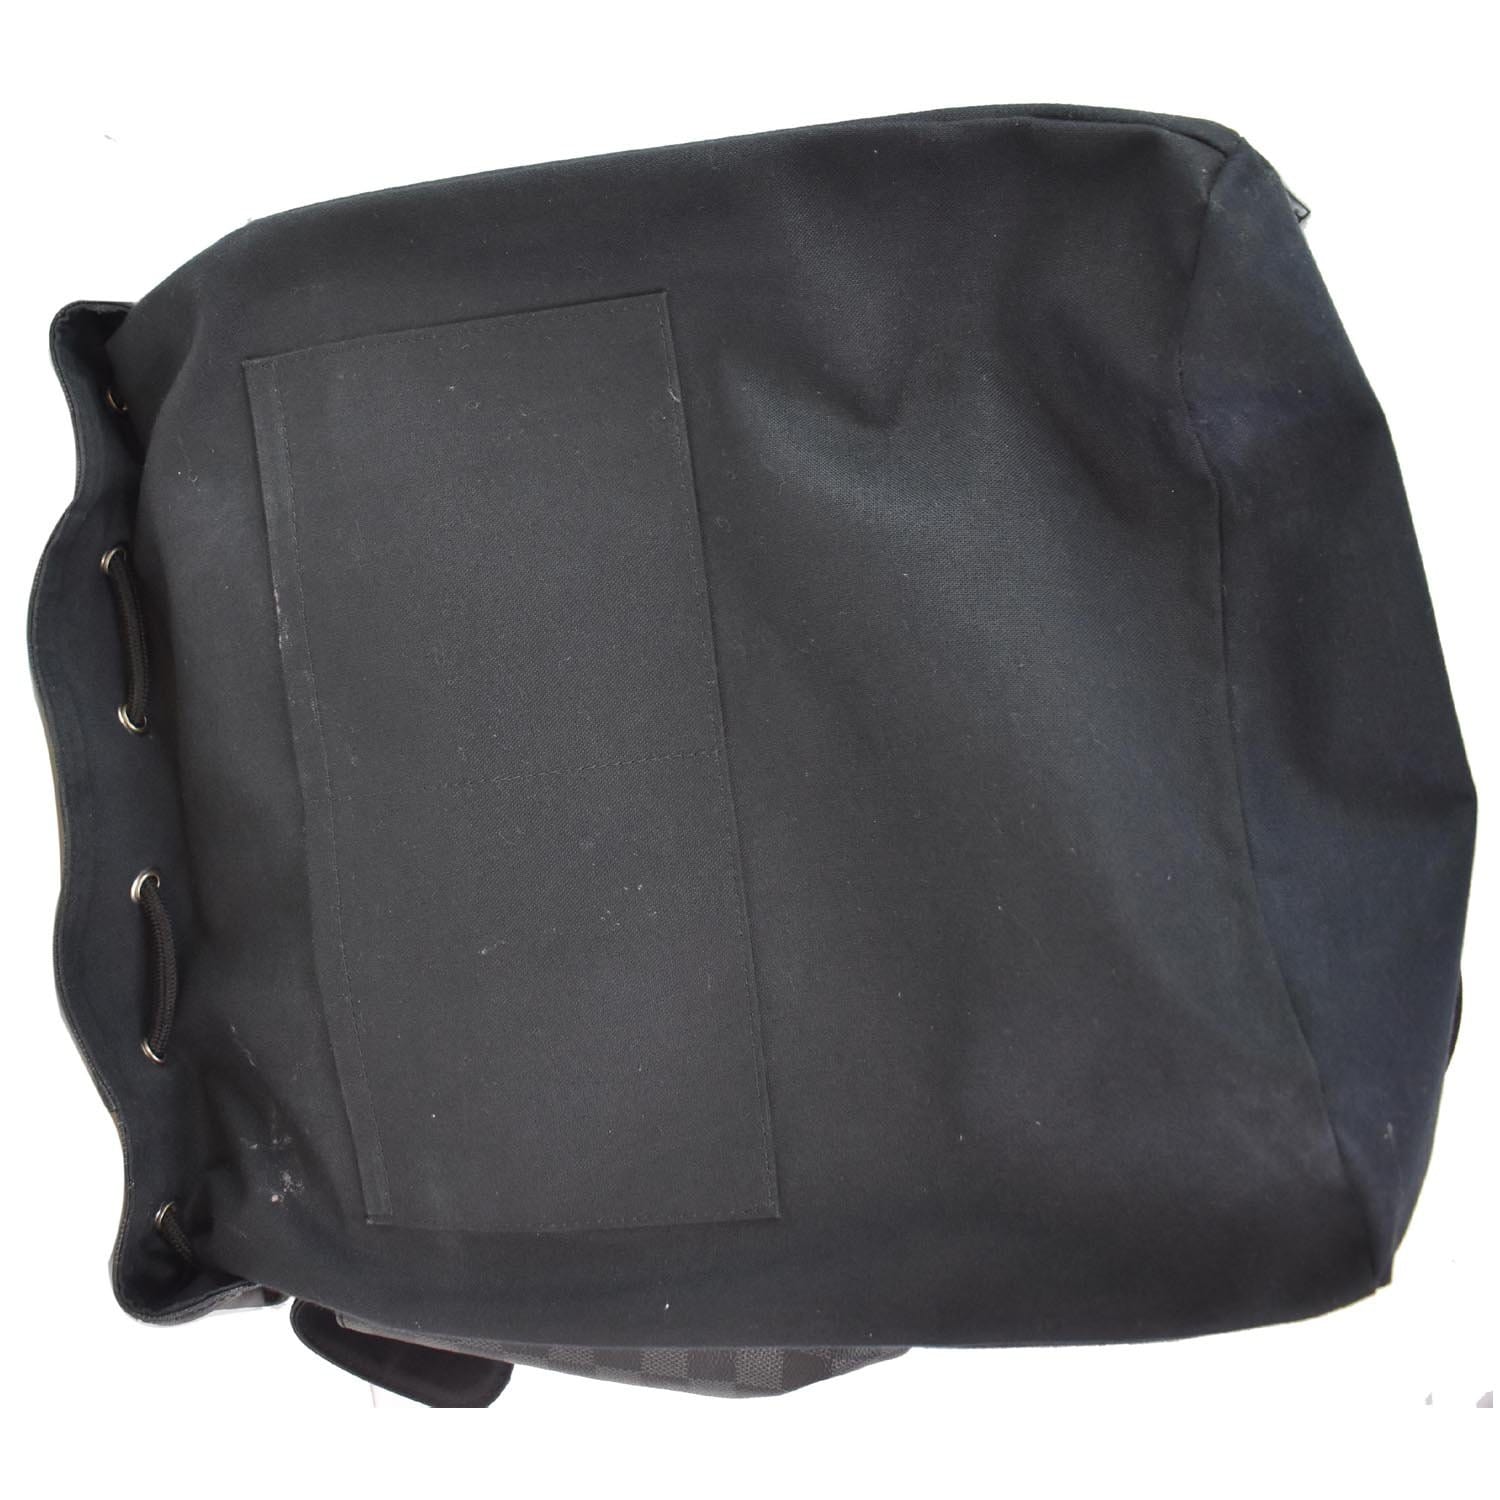 LV christopher pm damier graphite backpack N41379